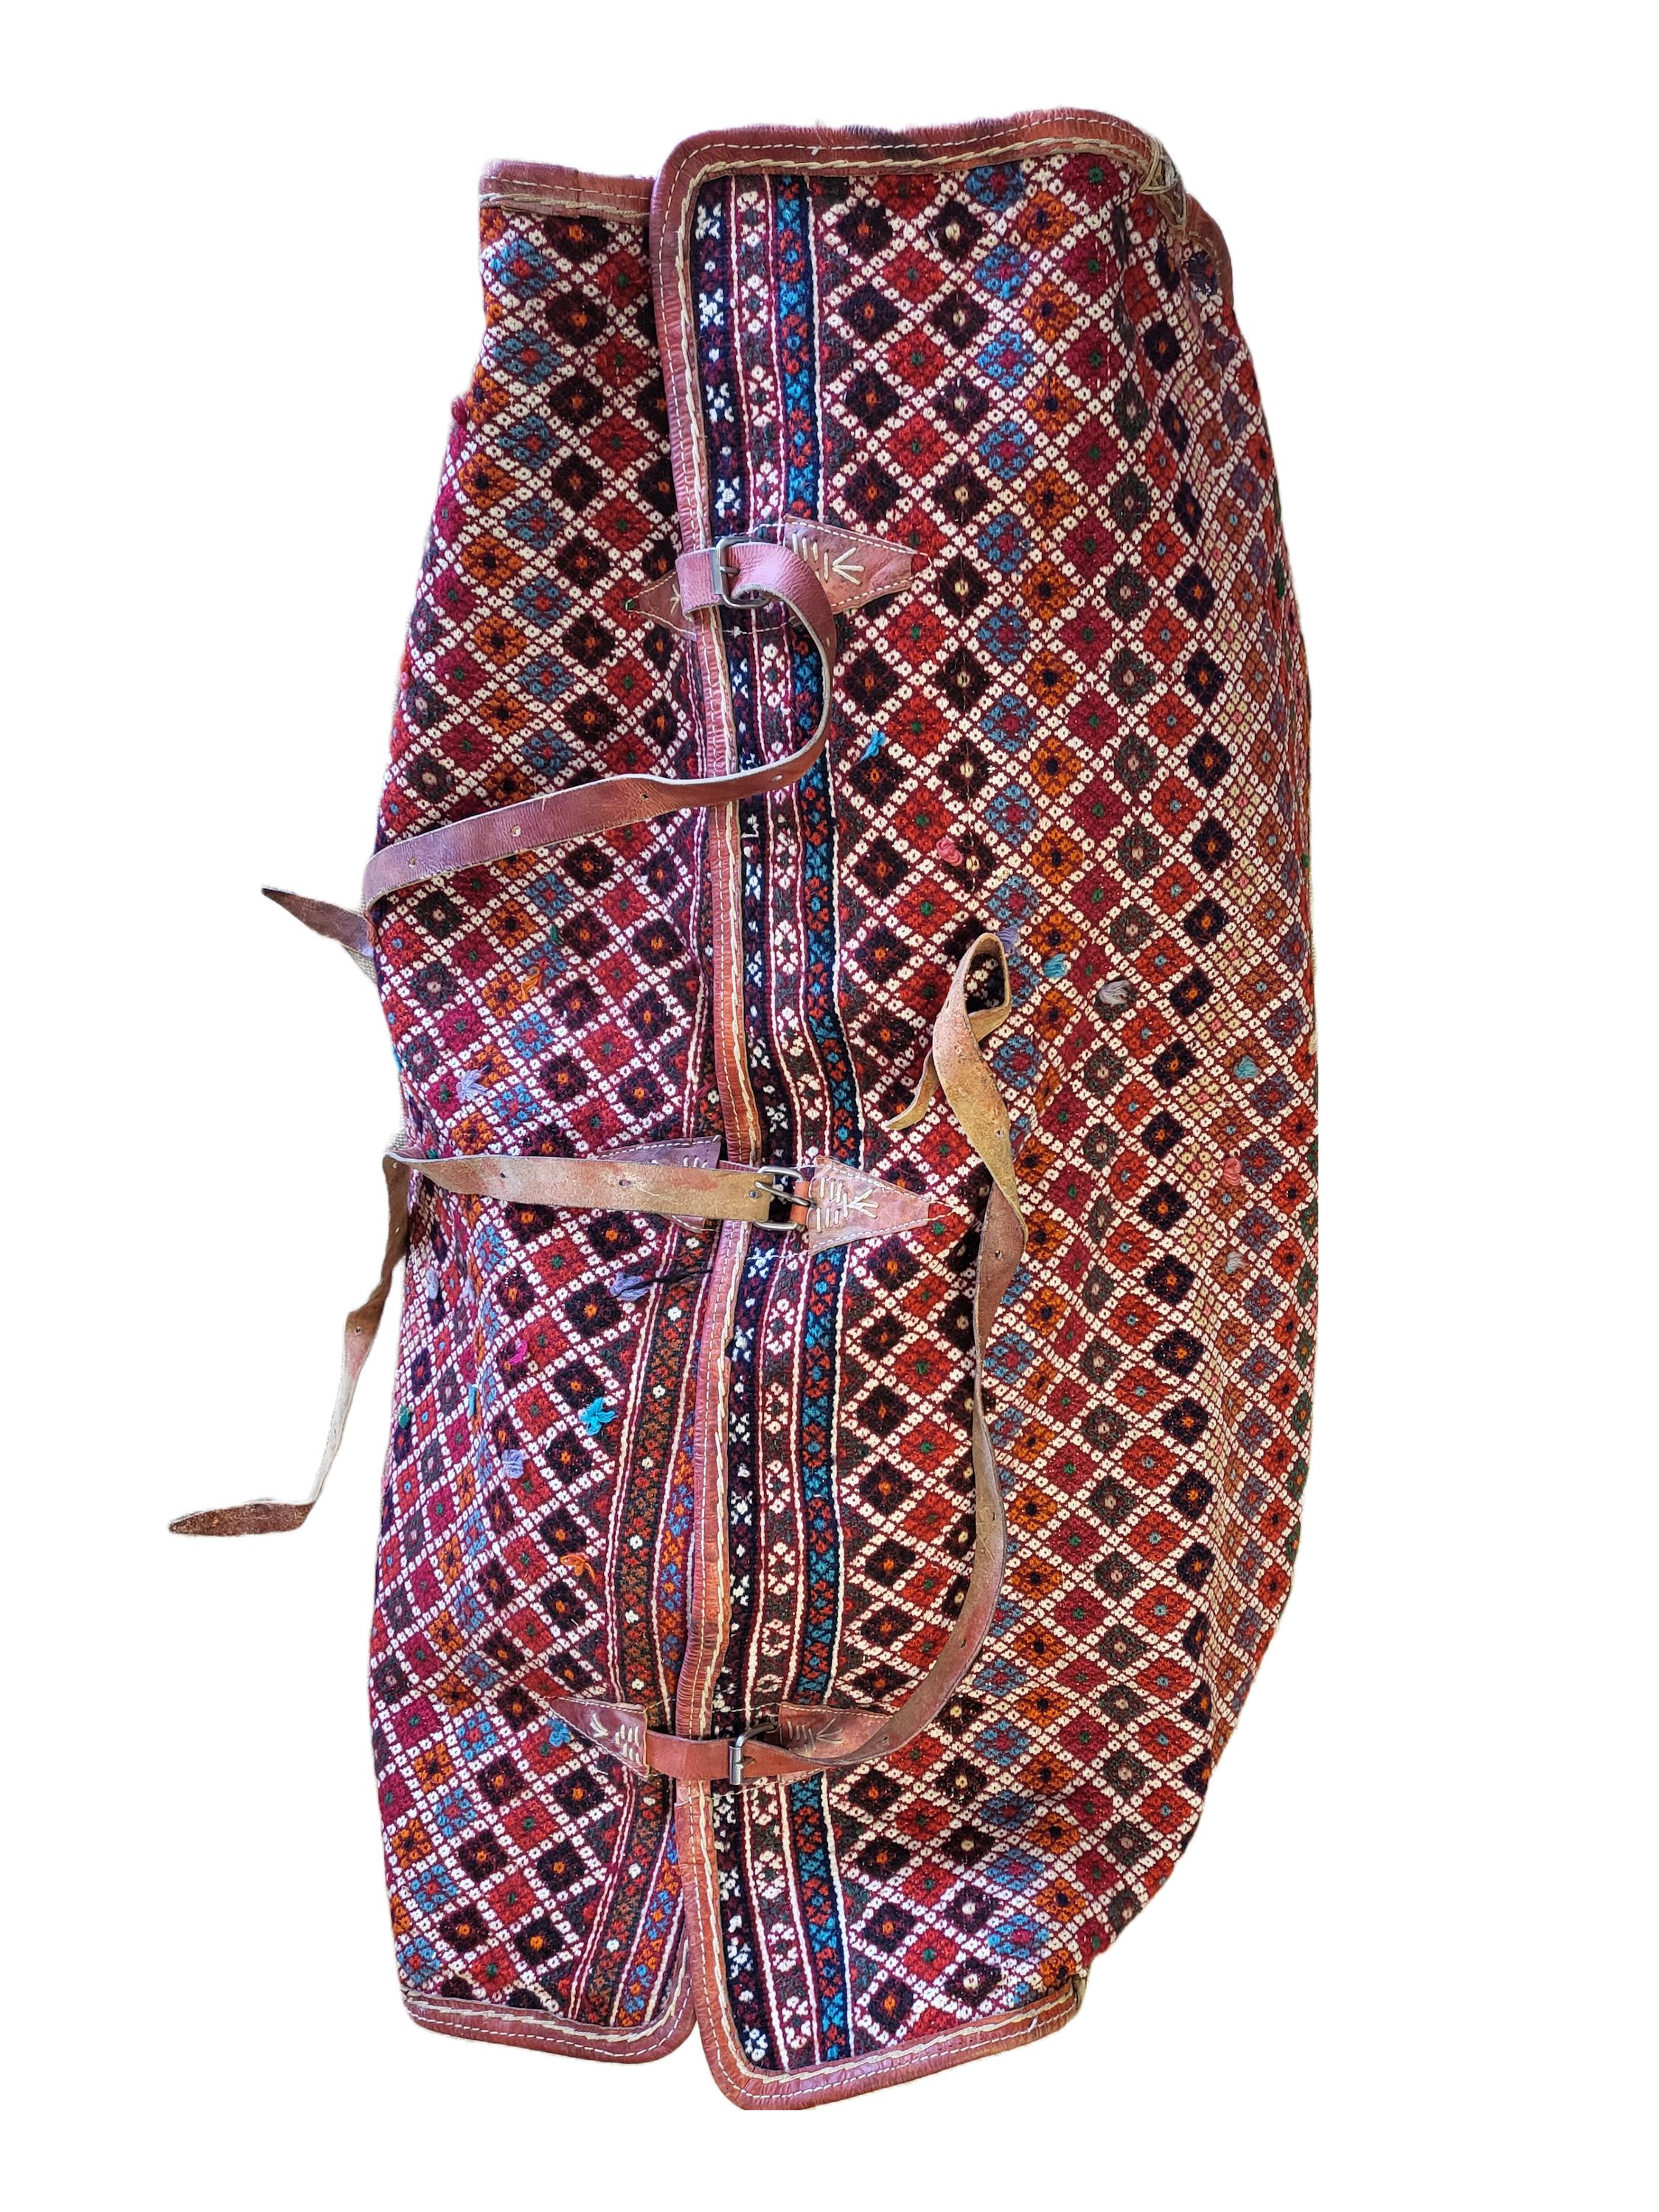 Needlework Antique Persian Qashqai Mafrash- Large Tribal Sadle Bag For Sale